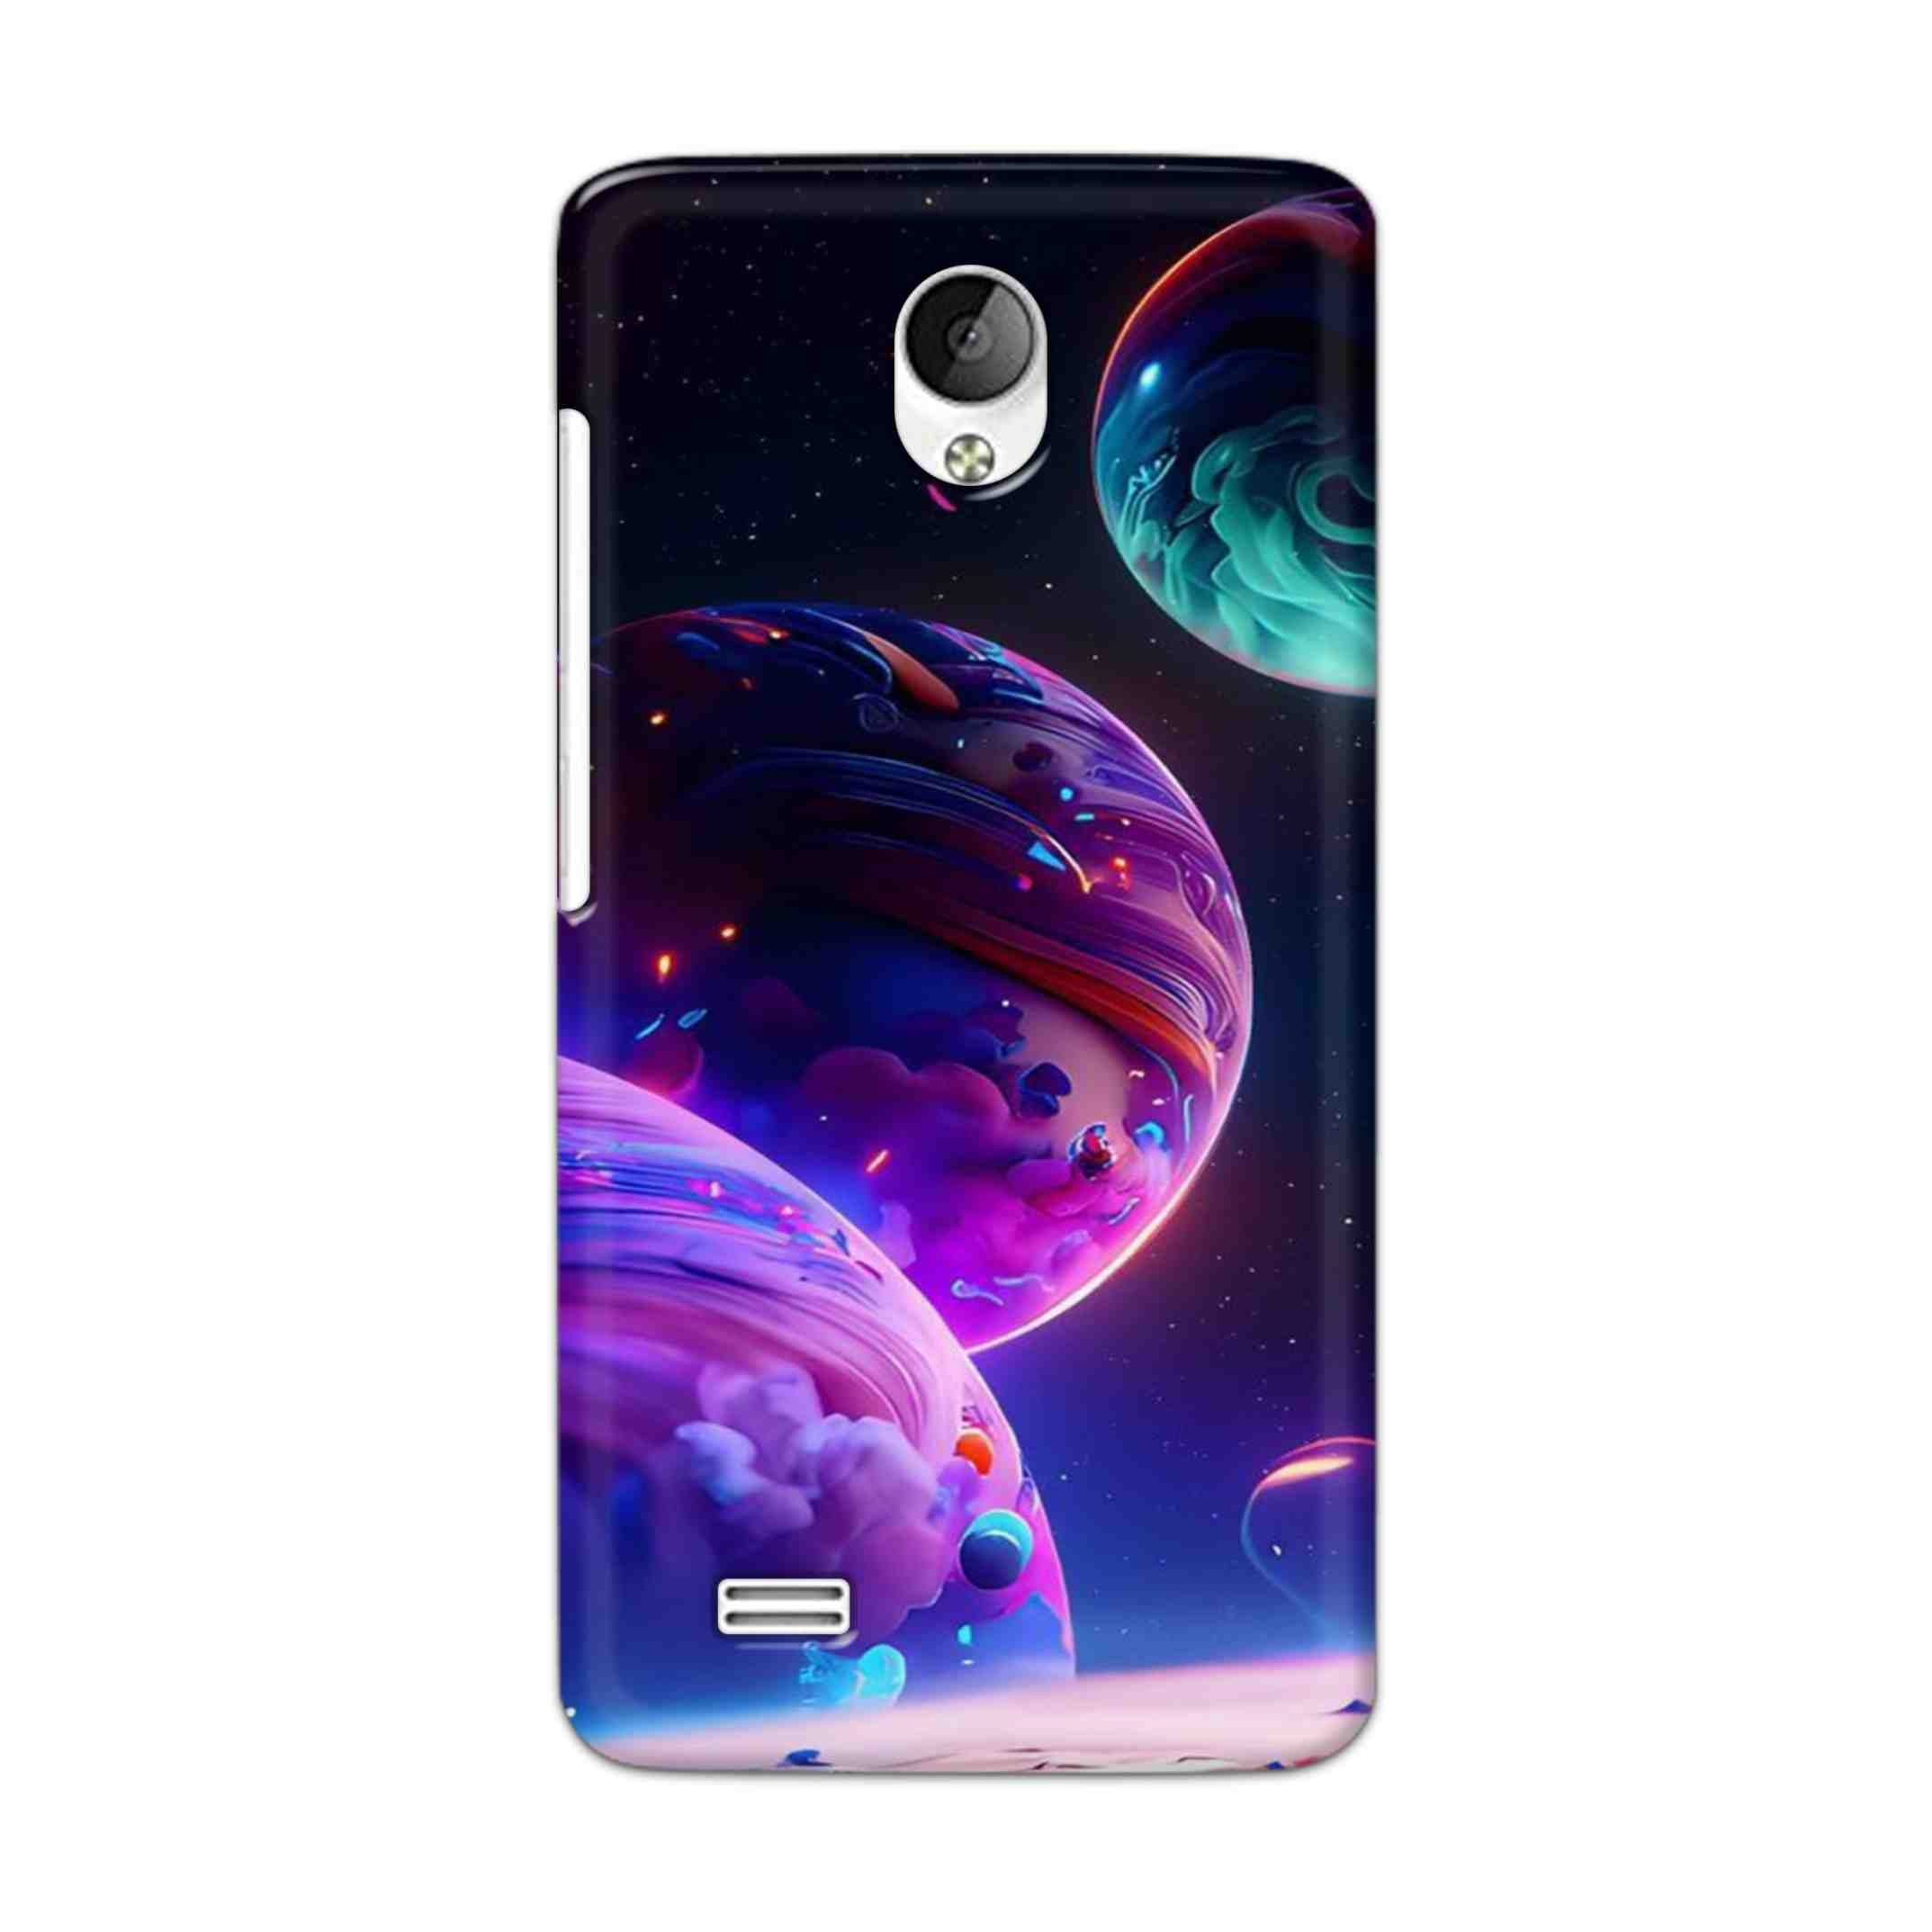 Buy 3 Earth Hard Back Mobile Phone Case Cover For Vivo Y21 / Vivo Y21L Online